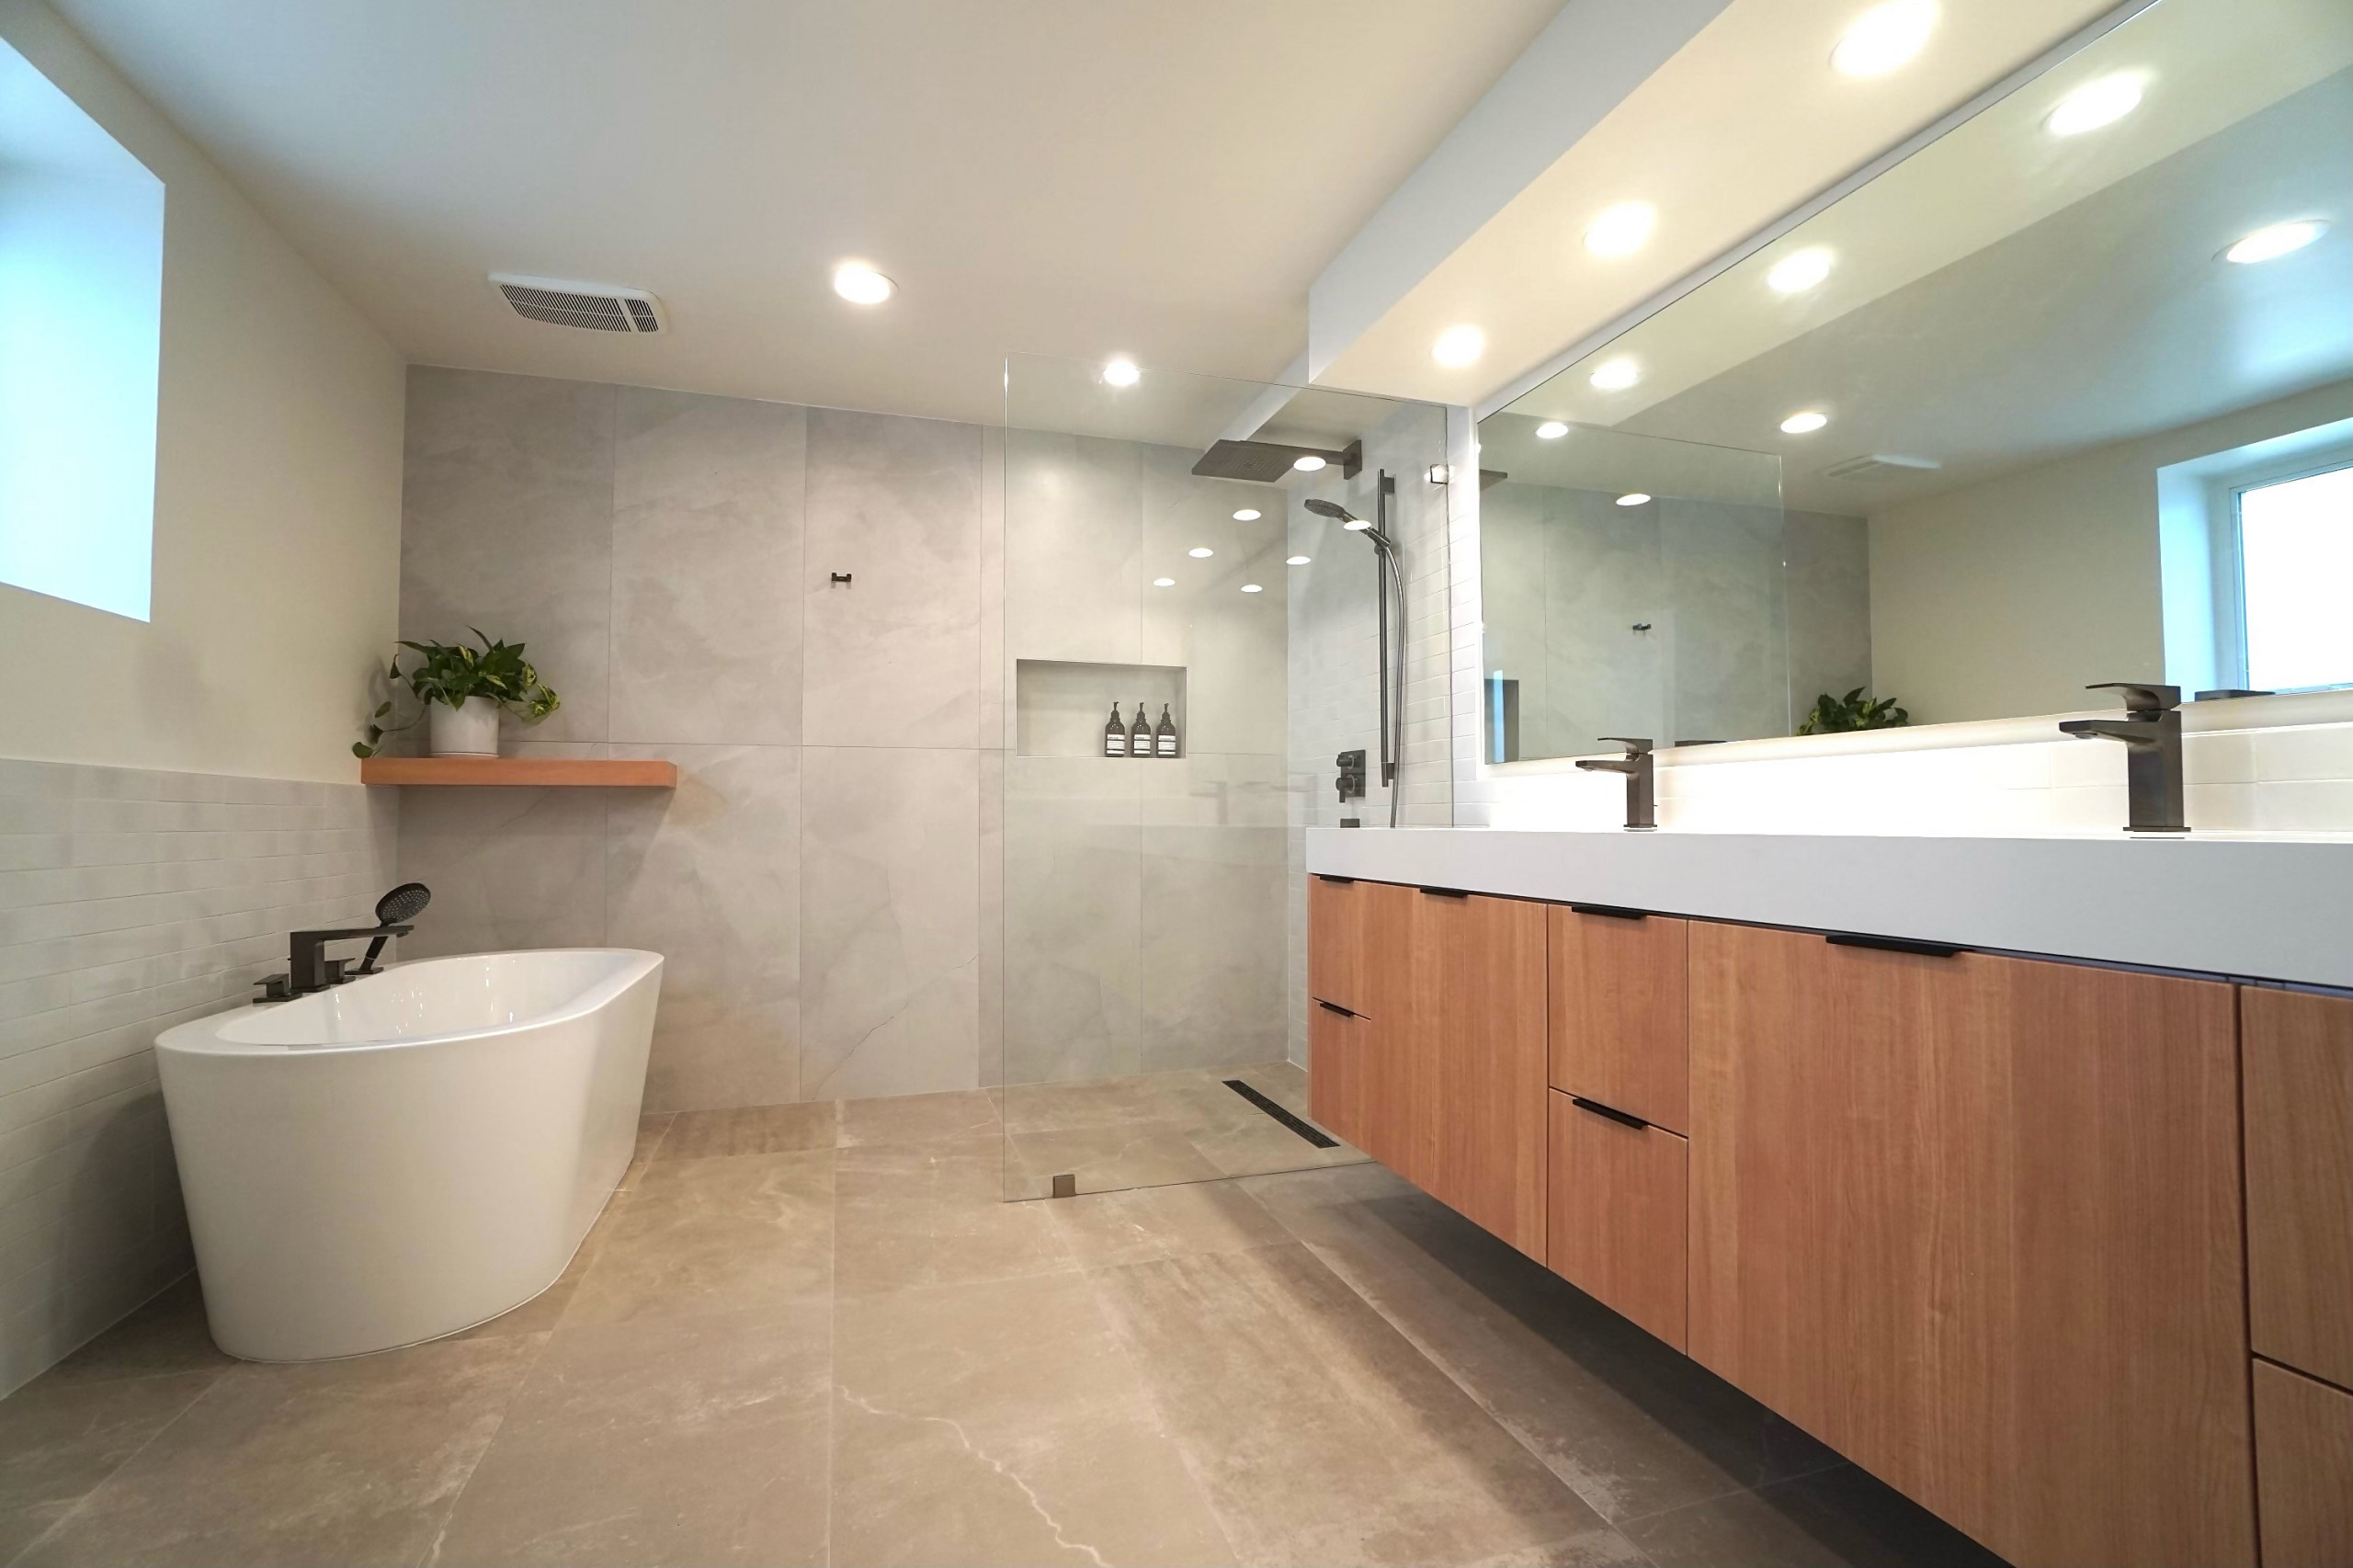 Bathroom Remodel - Mount Washington, CA